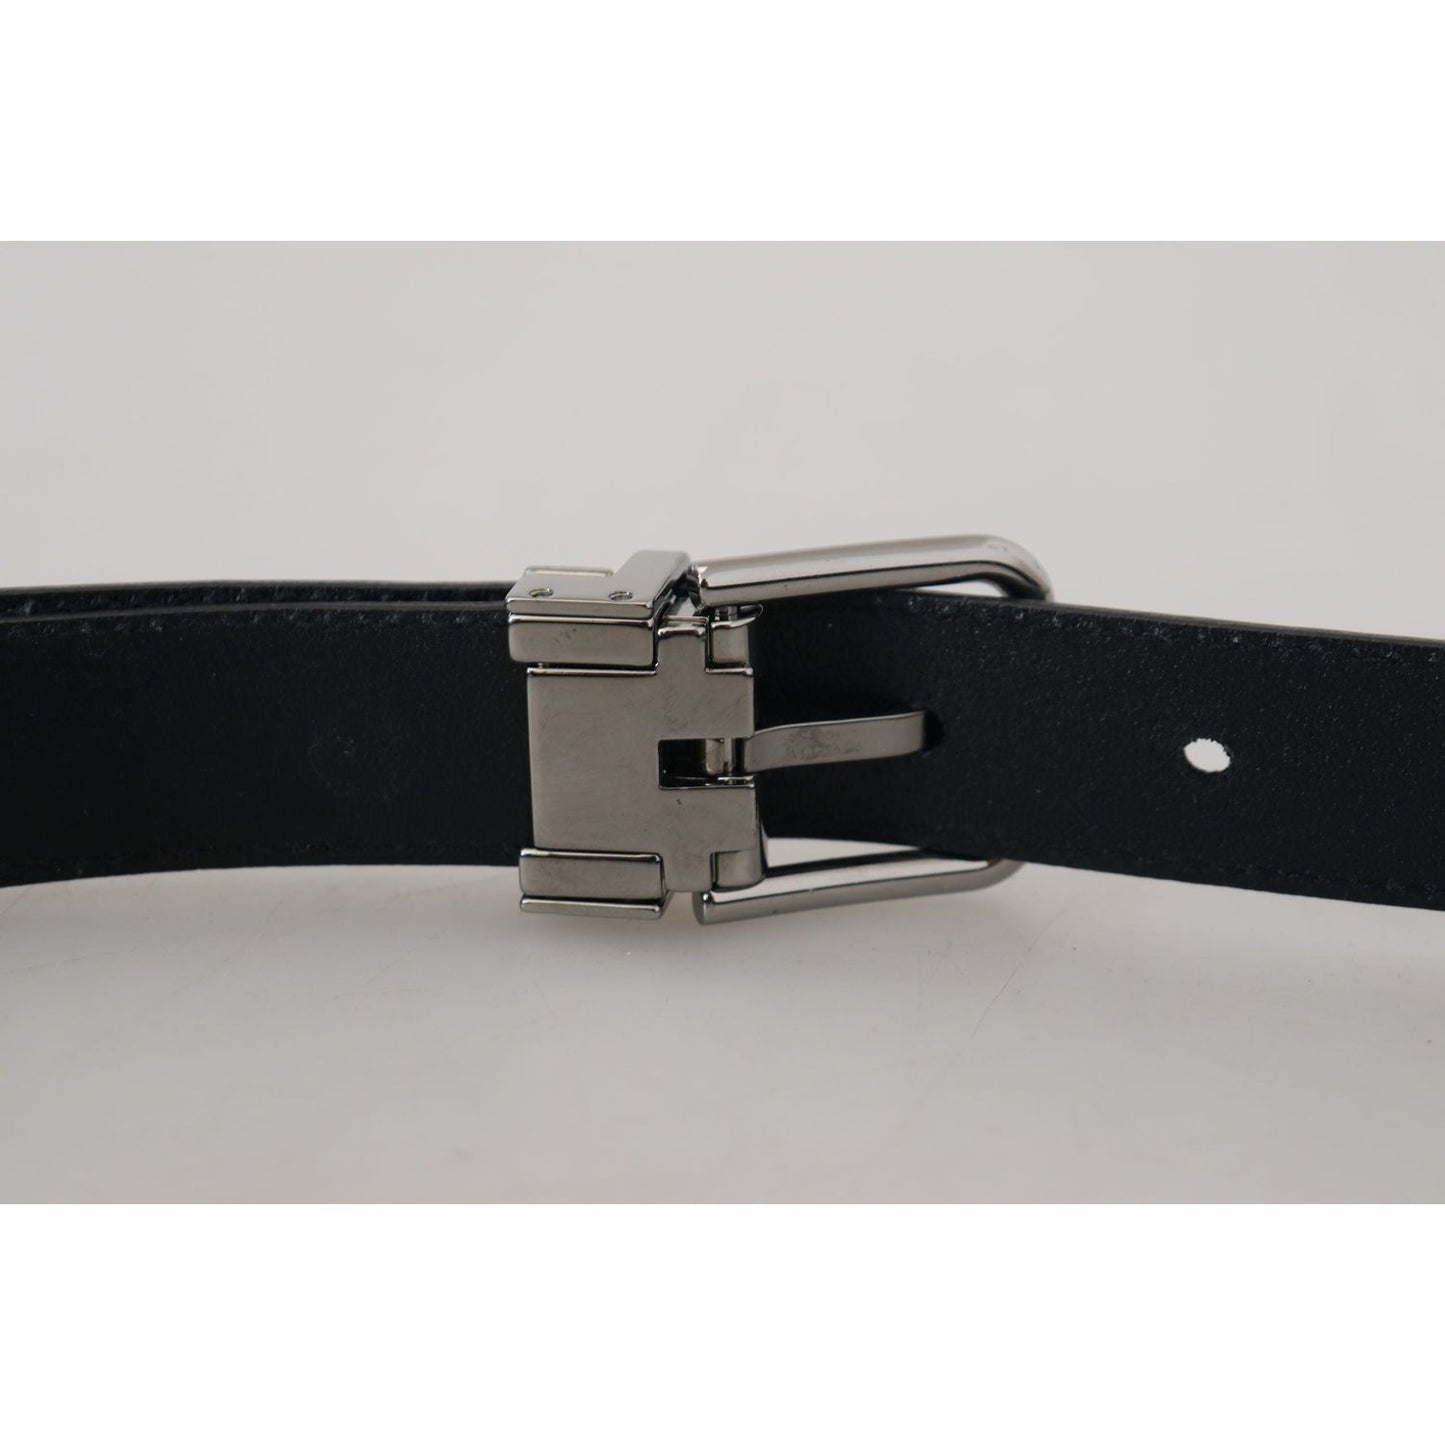 Dolce & Gabbana Elegant Blue Calf Leather Belt blue-calf-leather-silver-tone-metal-buckle-belt